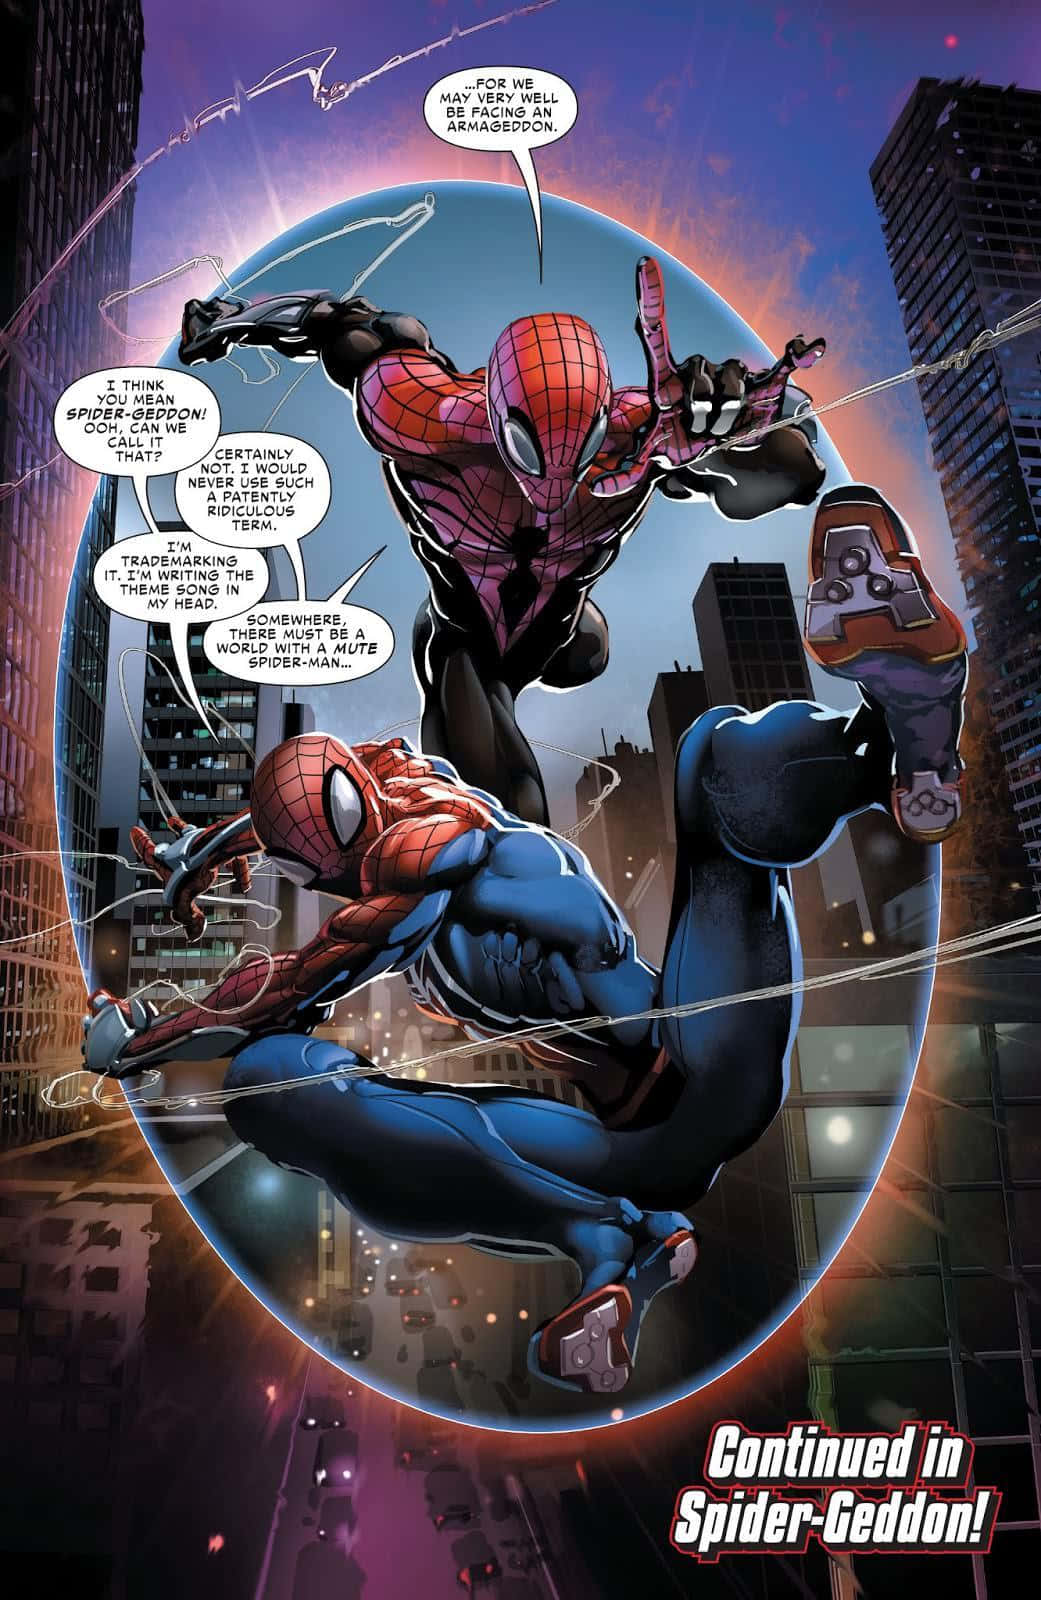 Spider-Geddon: The Ultimate Multiverse Battle Wallpaper